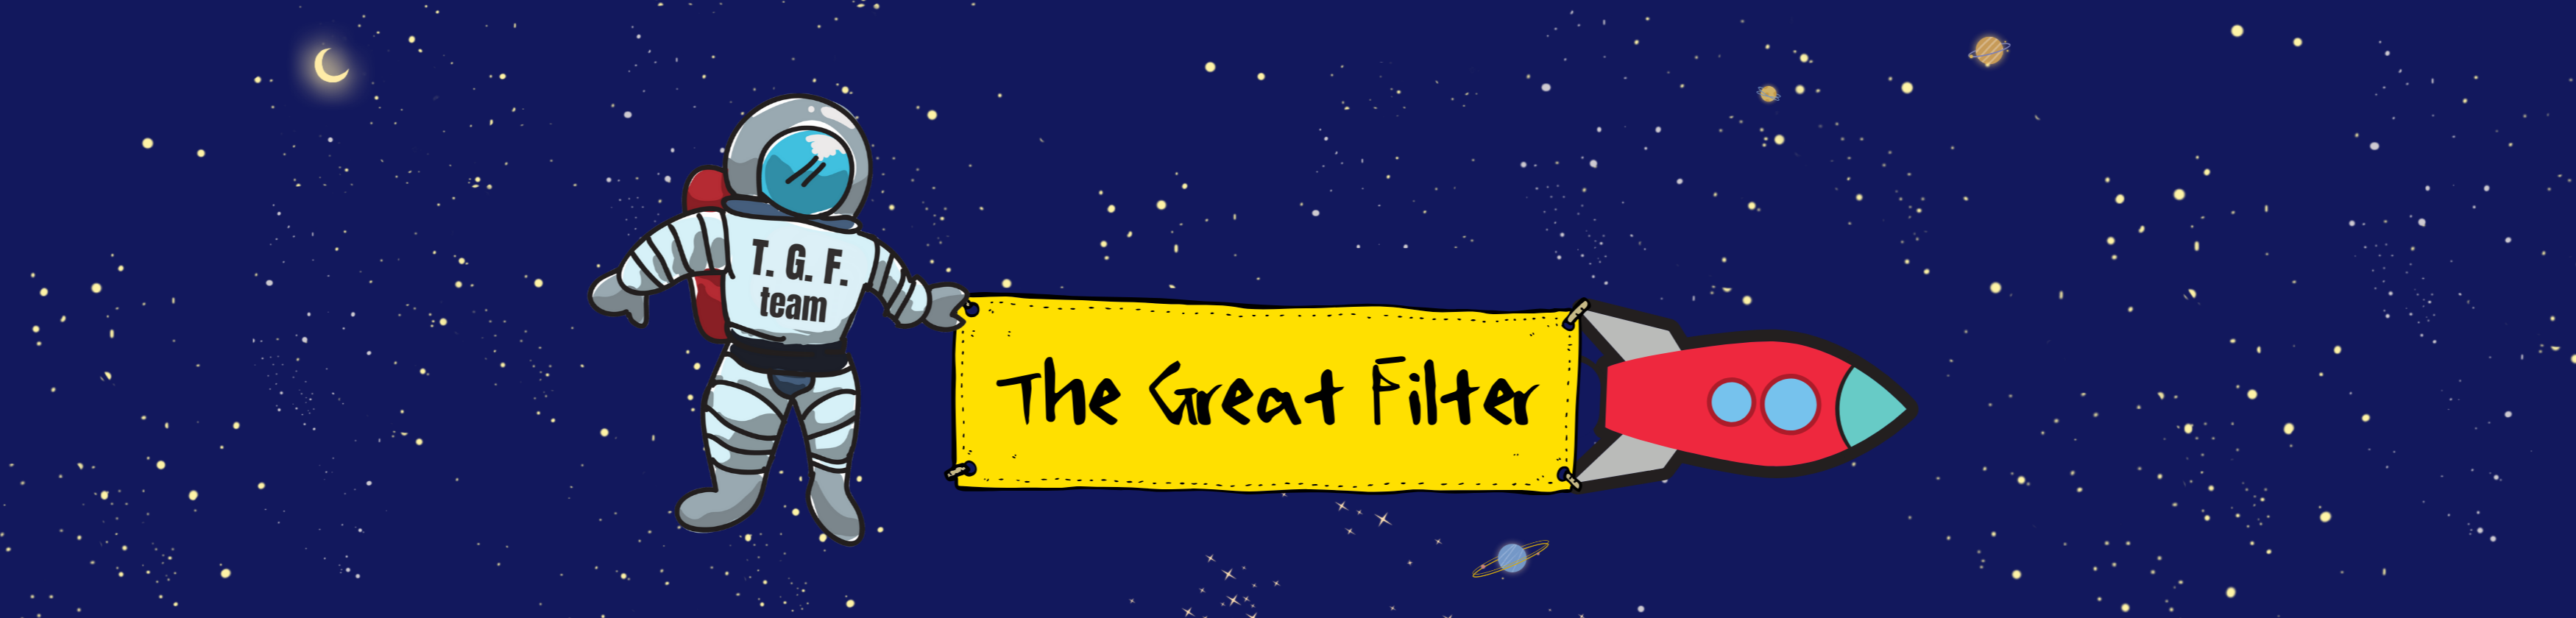 thegreatfilter公众号:the great filter,专注探索商业世界.